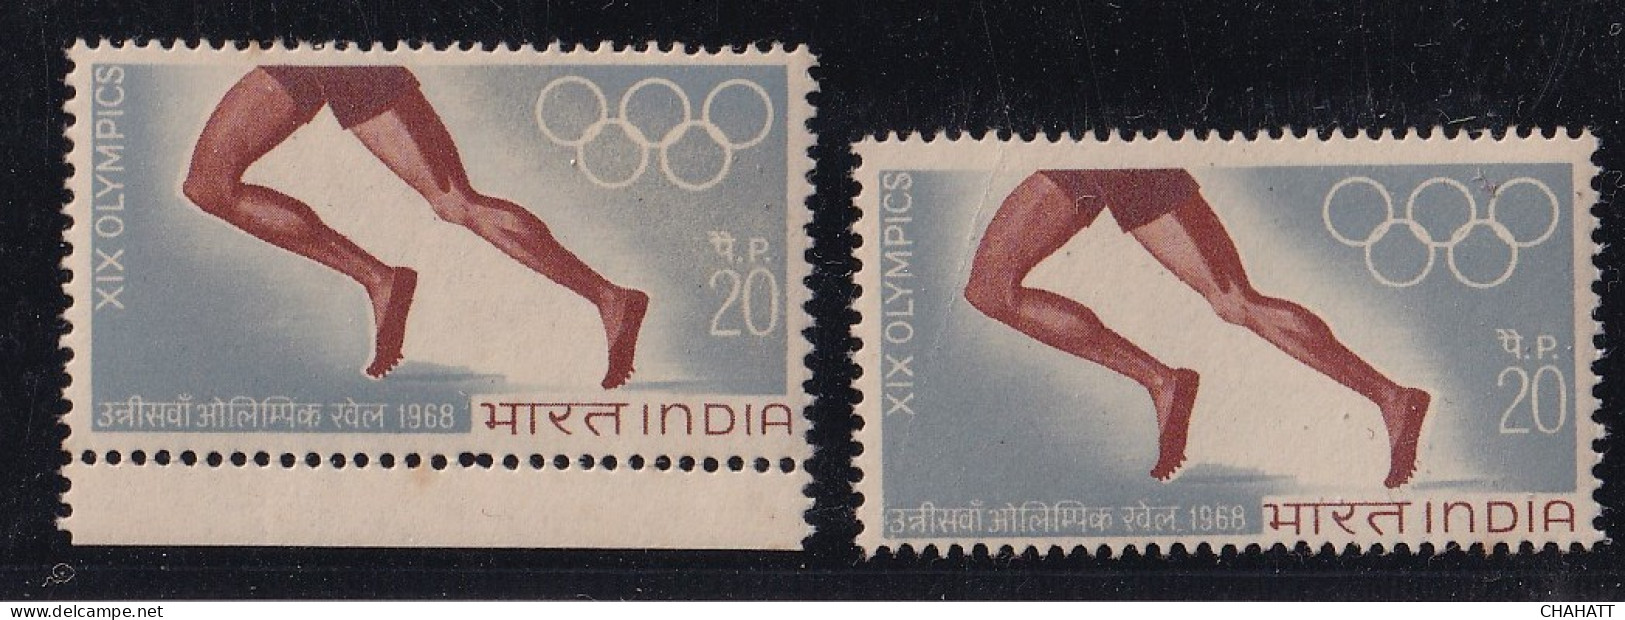 INDIA-19th OLYMPICS- 20p- ERROR-FRAME SHIFTING-MNH-IE-51 - Errors, Freaks & Oddities (EFO)